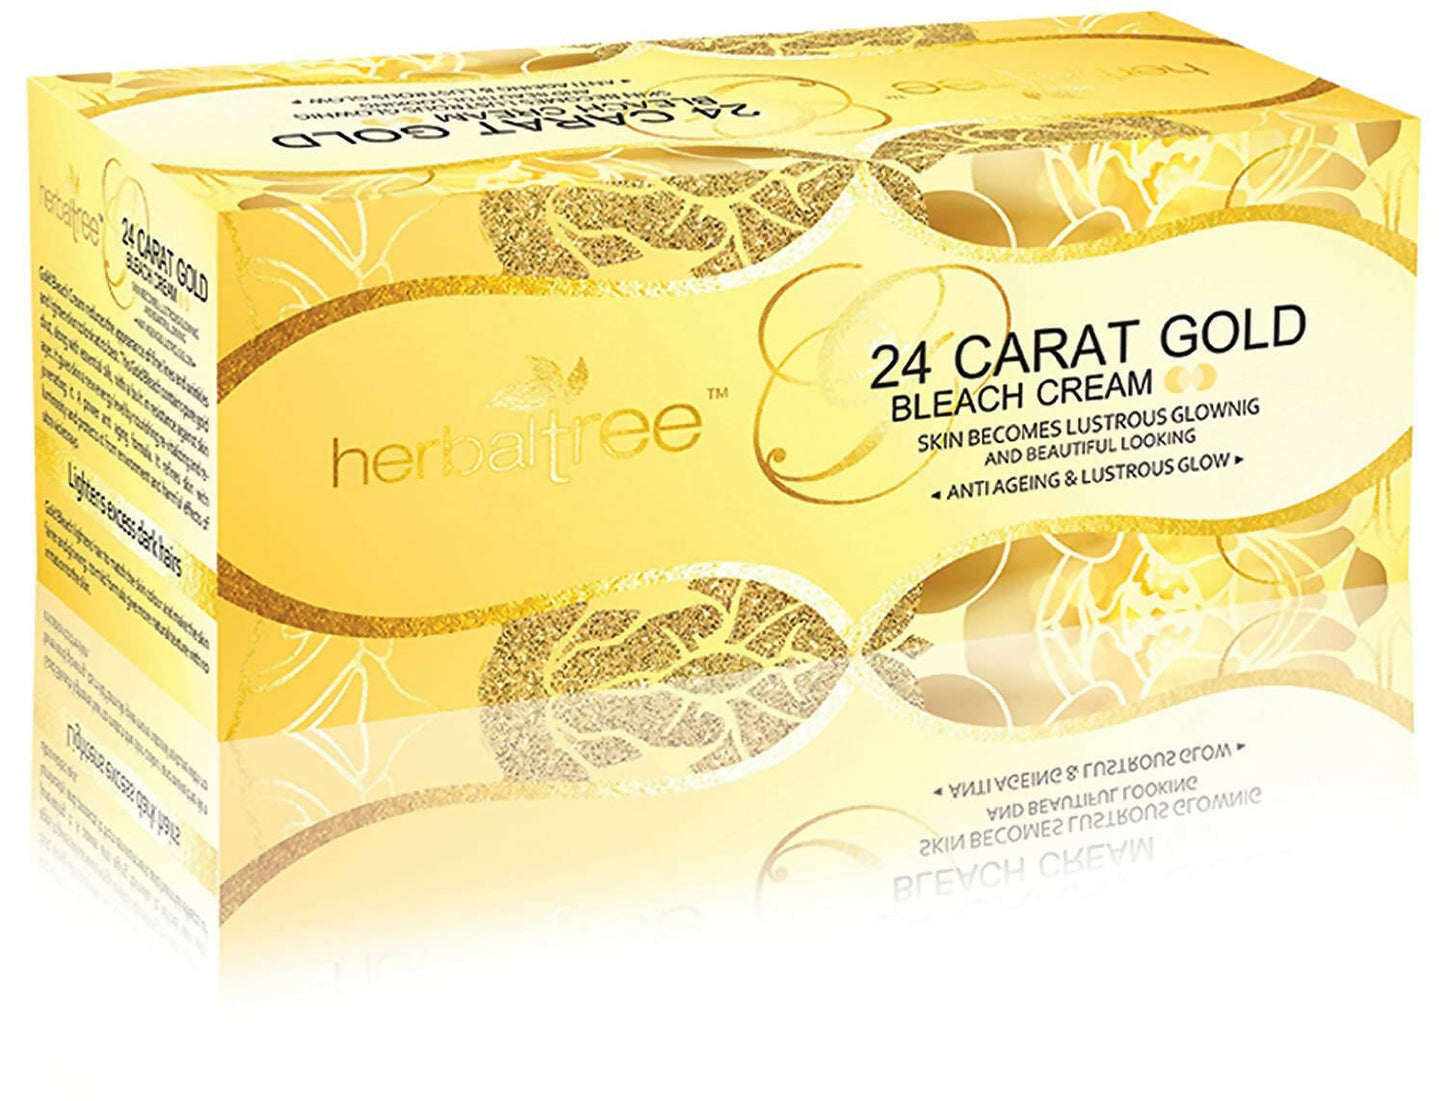 Herbal Tree 24 Carat Gold Bleach Cream - usa canada australia